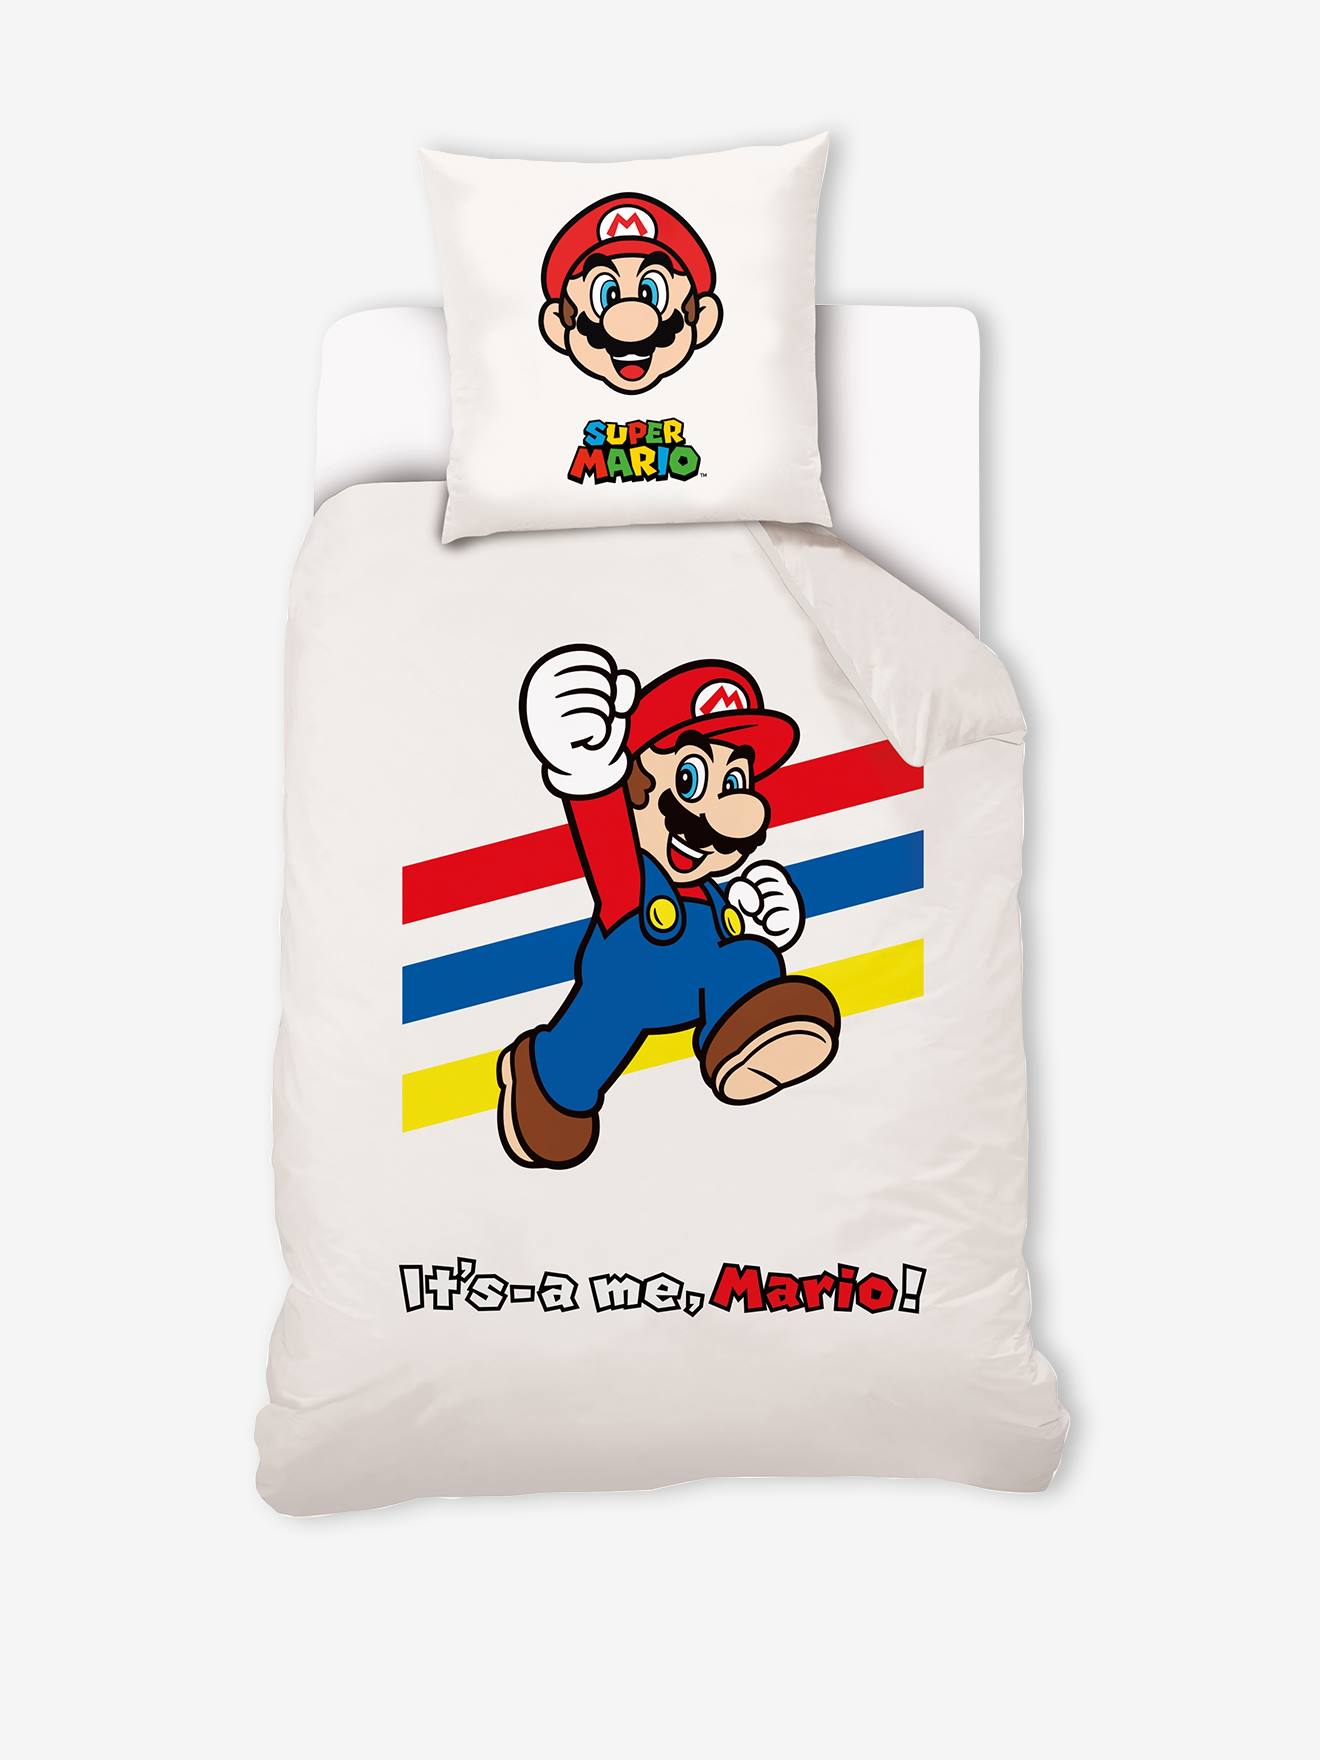 Housse de transport Super Mario